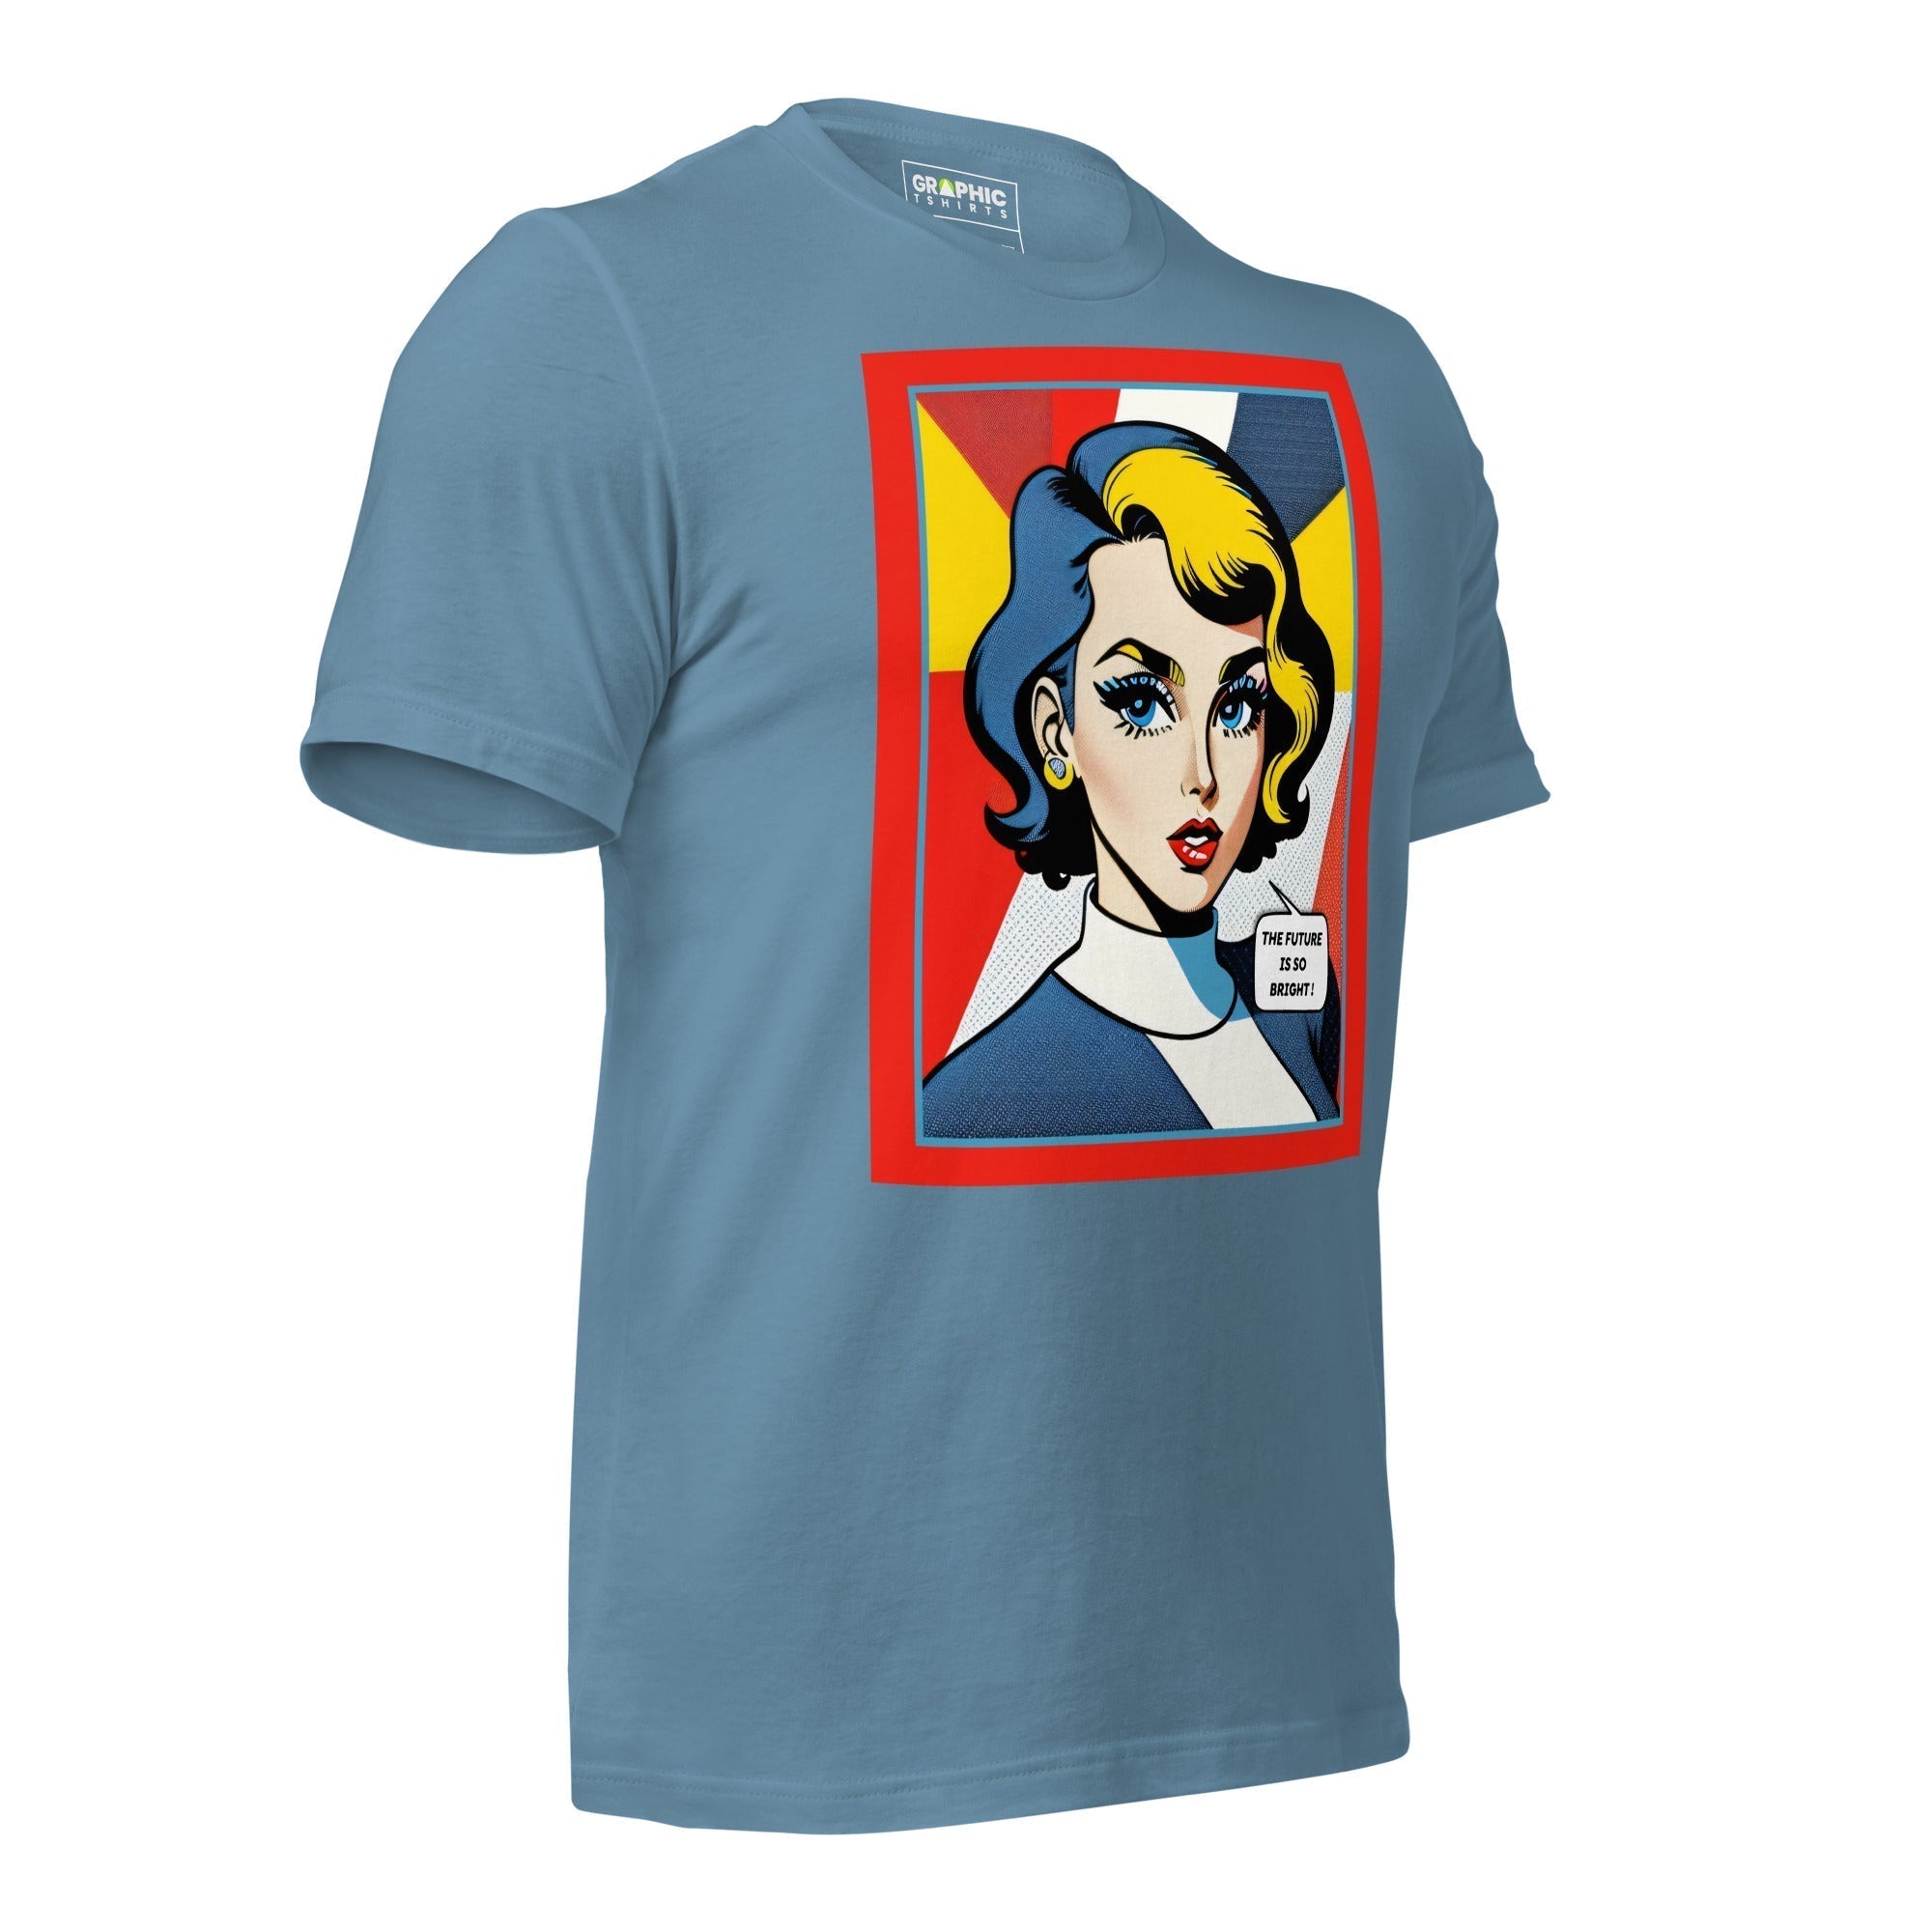 Unisex Crew Neck T-Shirt - Vintage American Comic Series v.45 - GRAPHIC T-SHIRTS